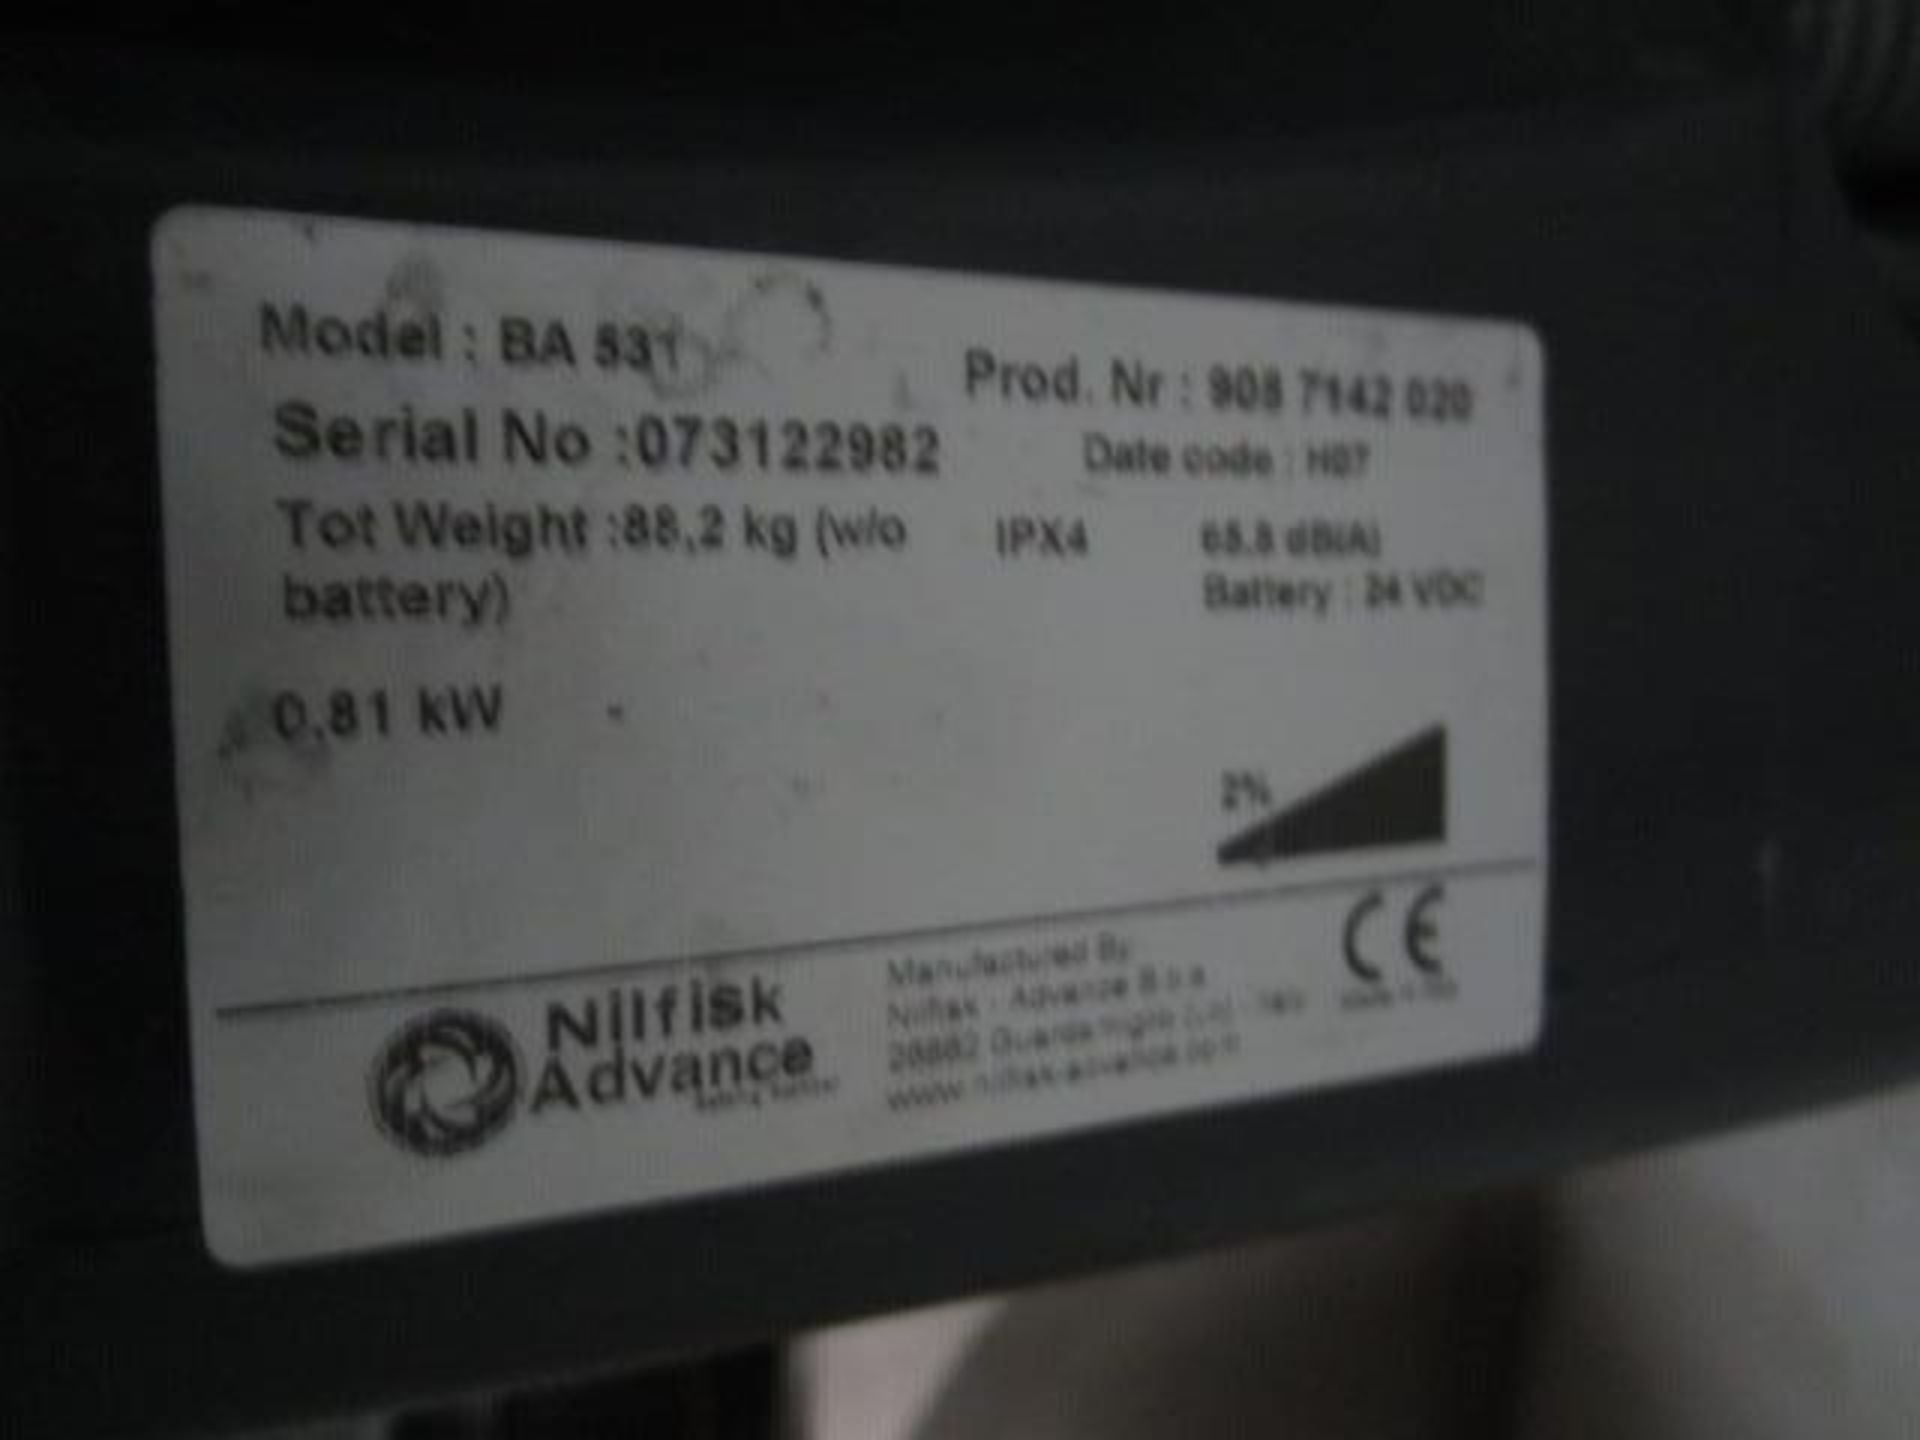 Nilfisk BA531 scrubber dryer, serial no. 073122982 - Image 4 of 4